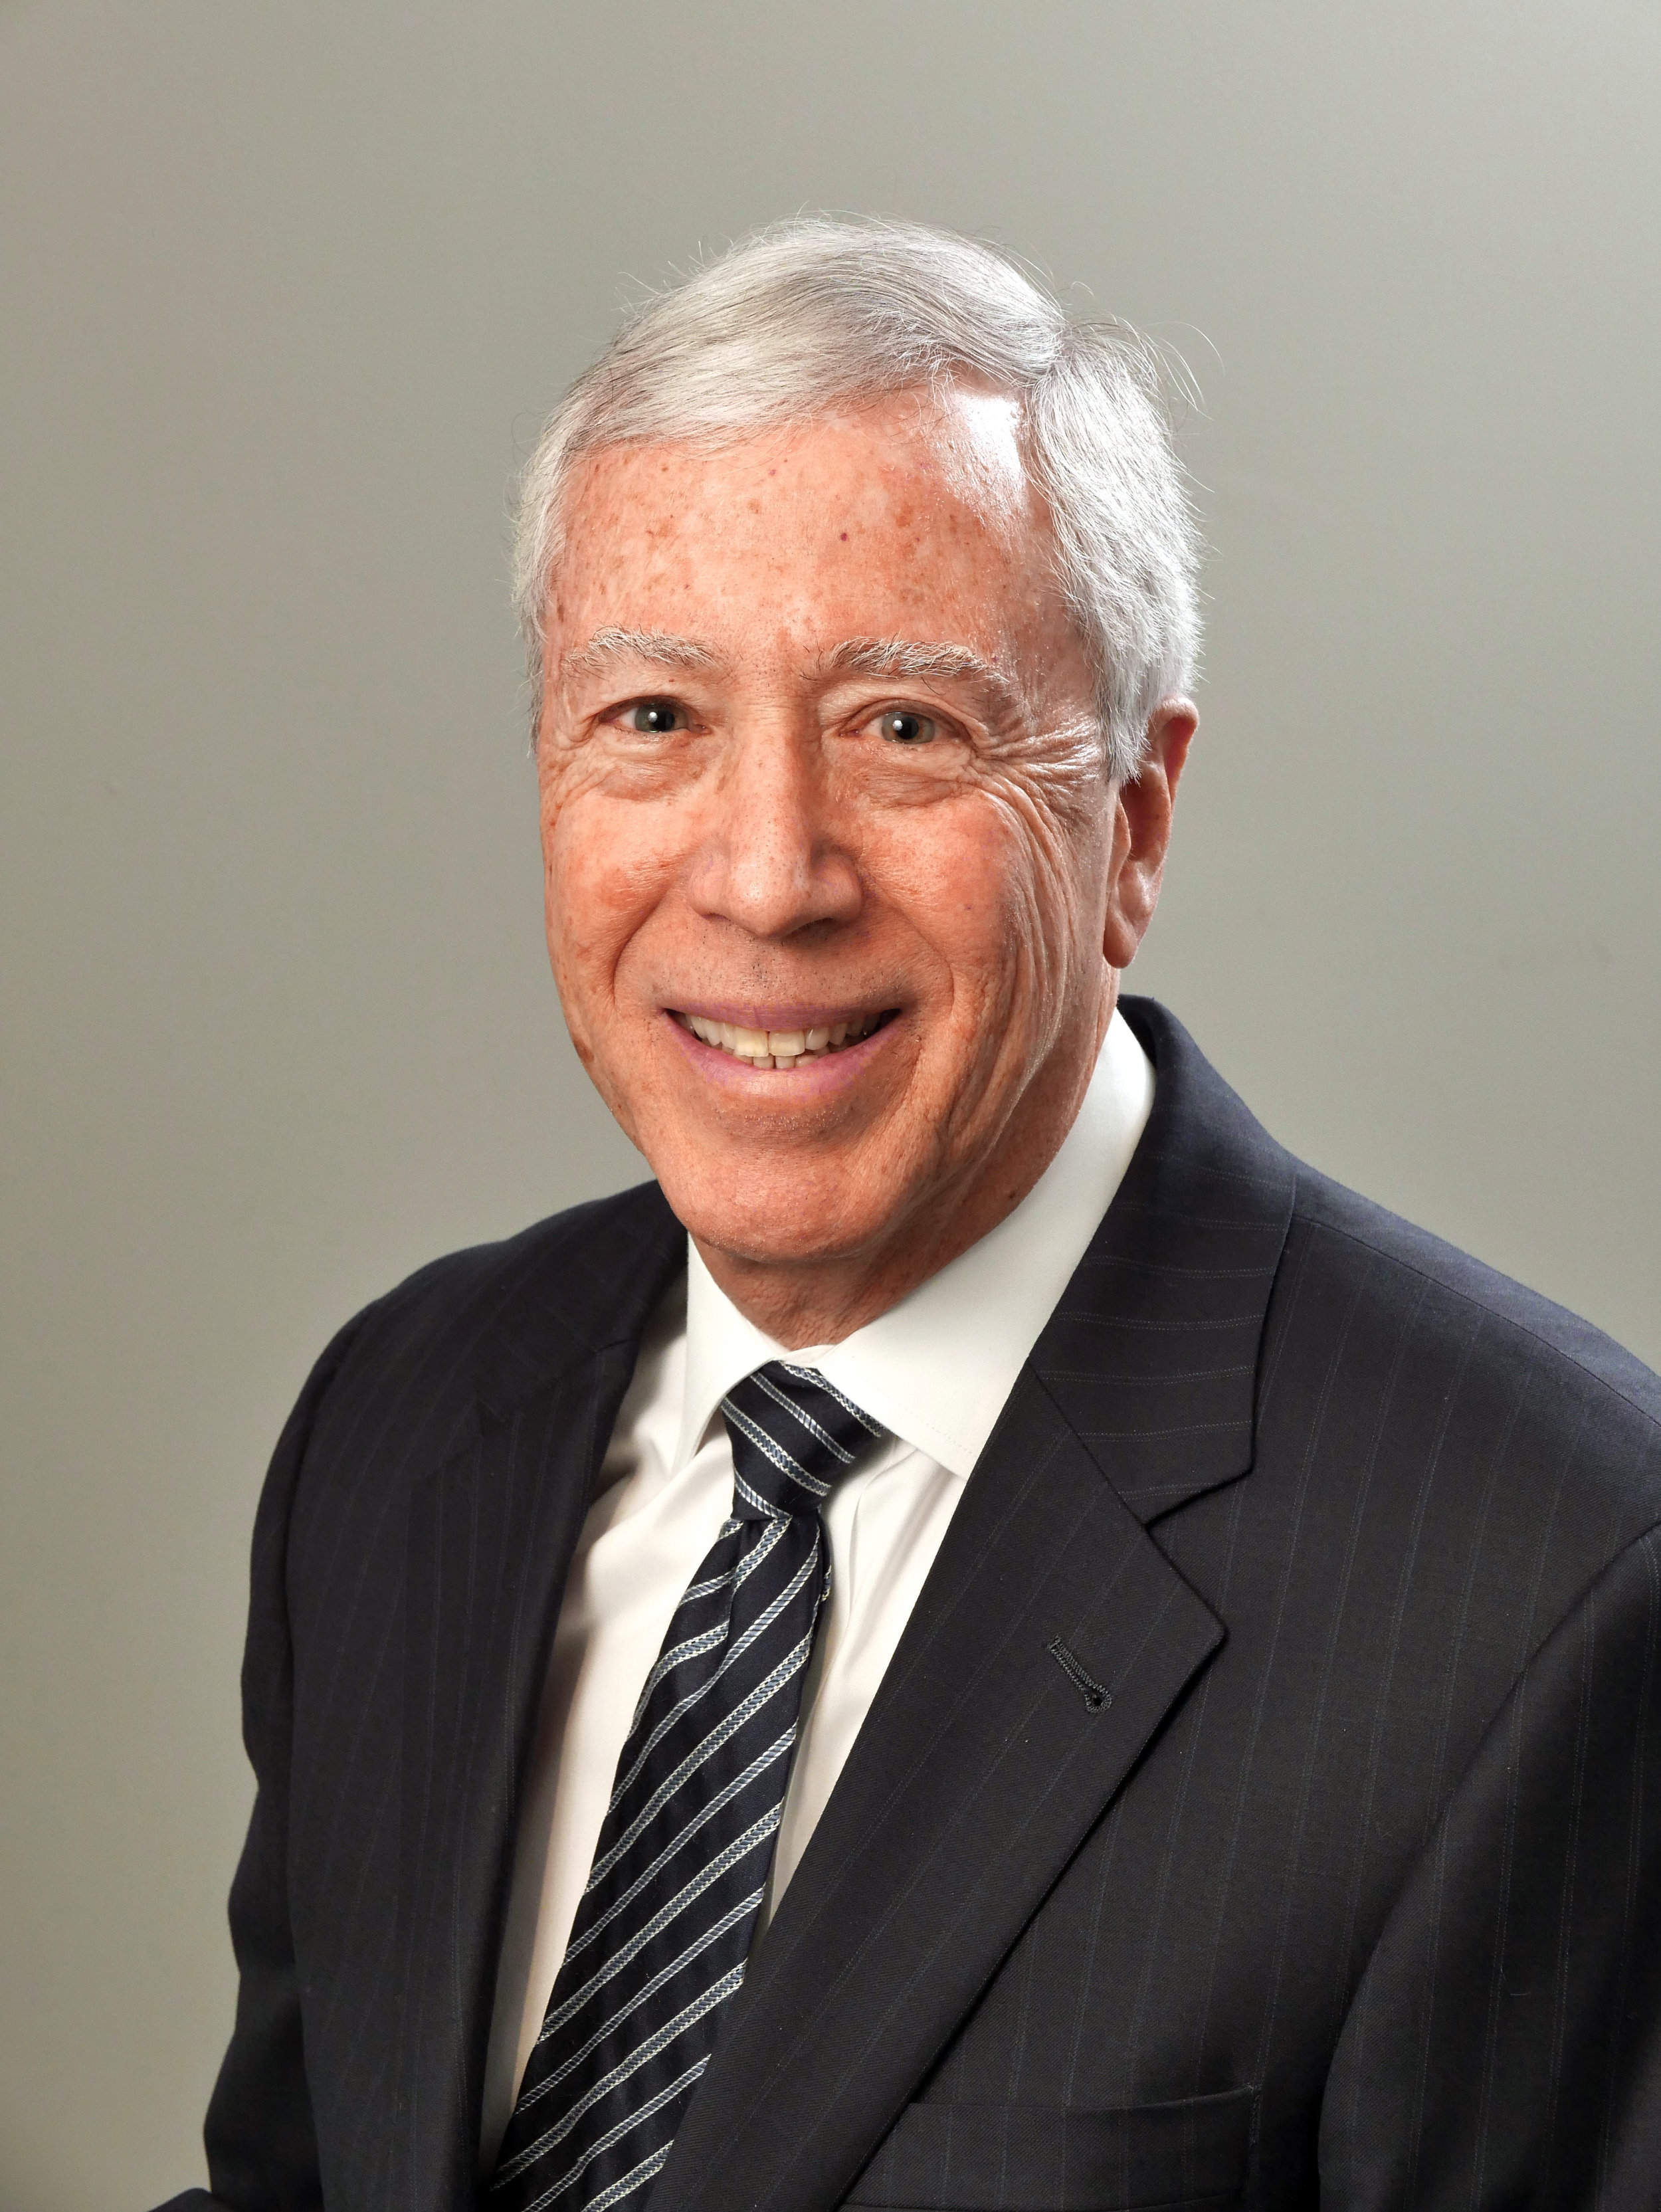 Michael Peterman, CEO